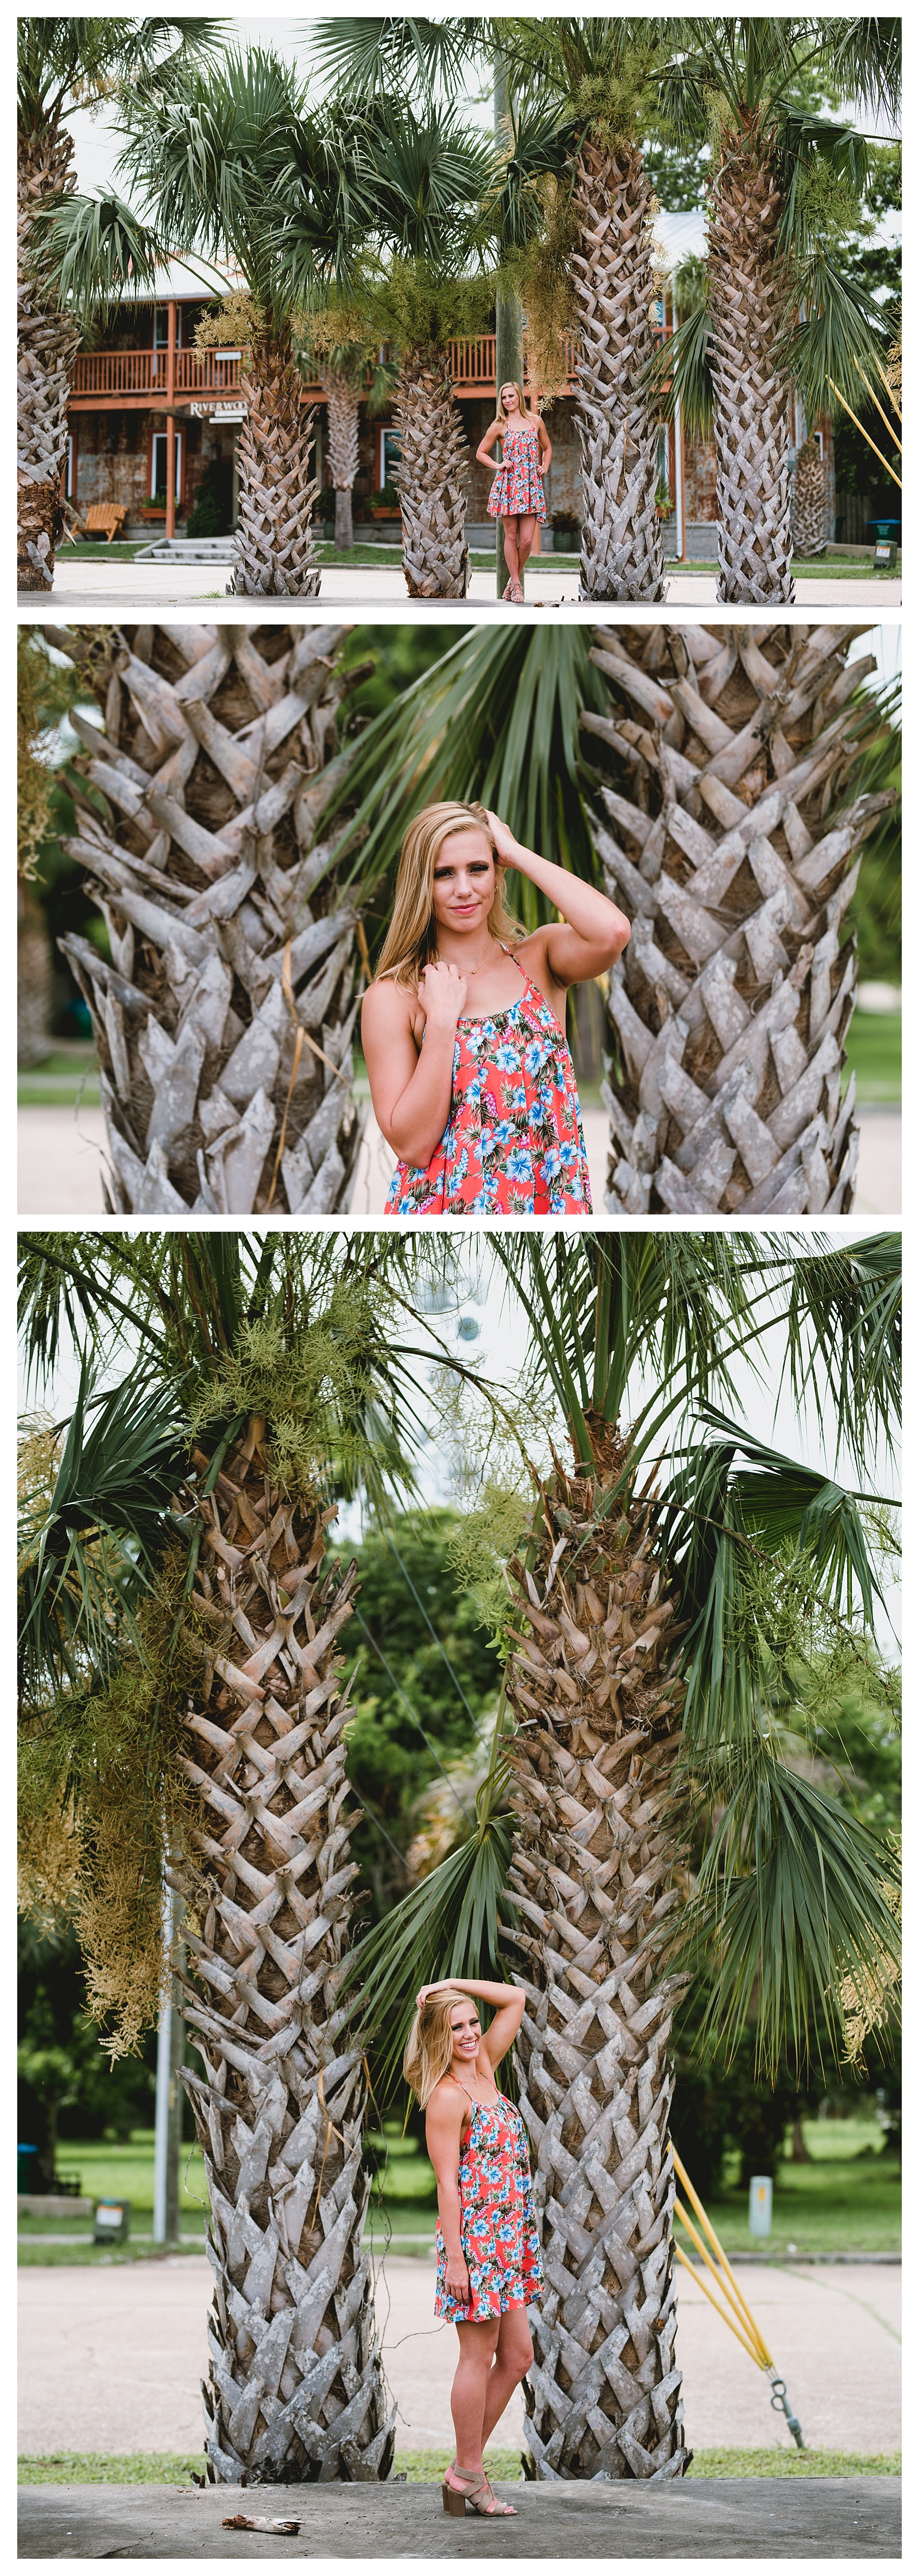 Senior photos with palm trees in Apalachicola, Florida.